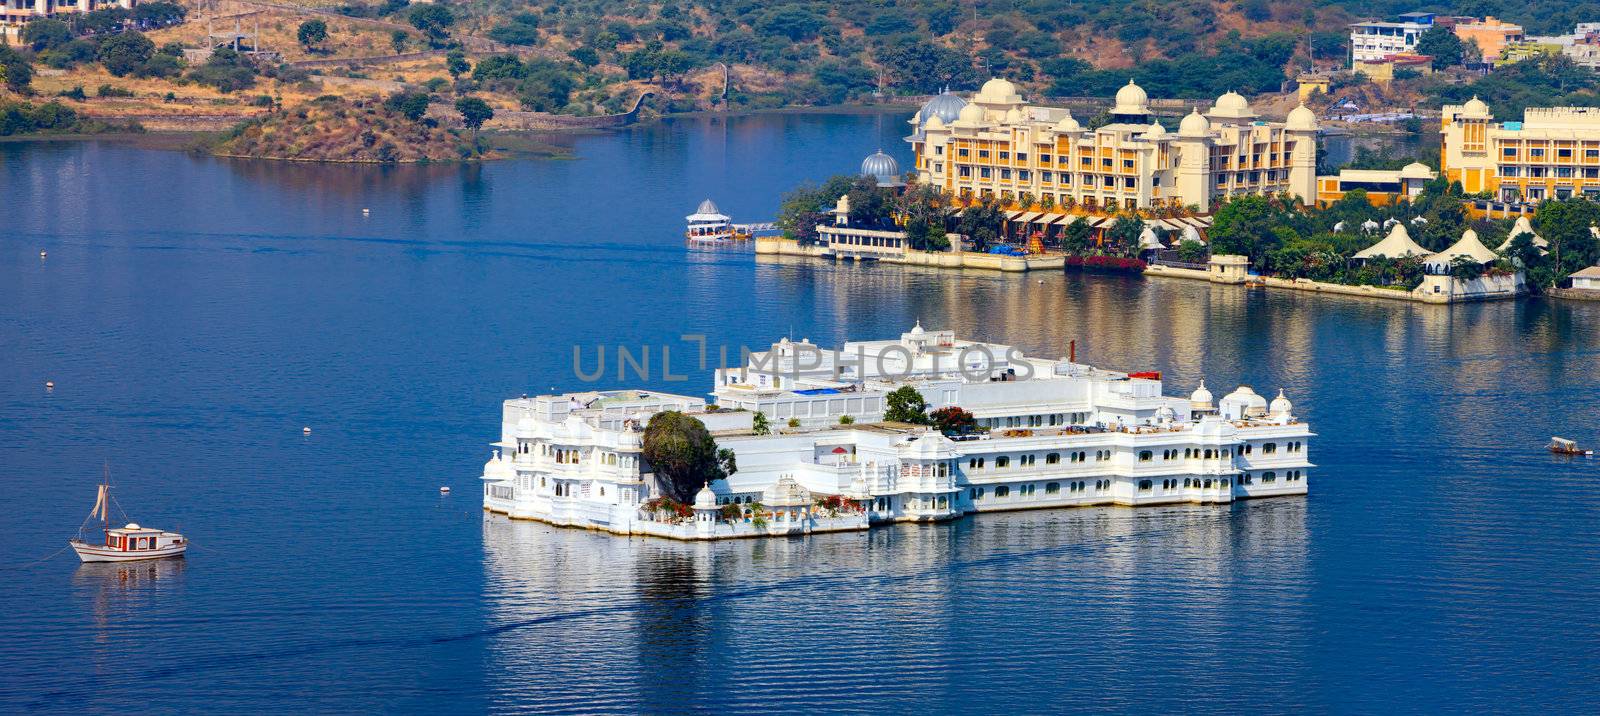 Lake Pichola and Taj Lake Palace in Udaipur. India. by vladimir_sklyarov